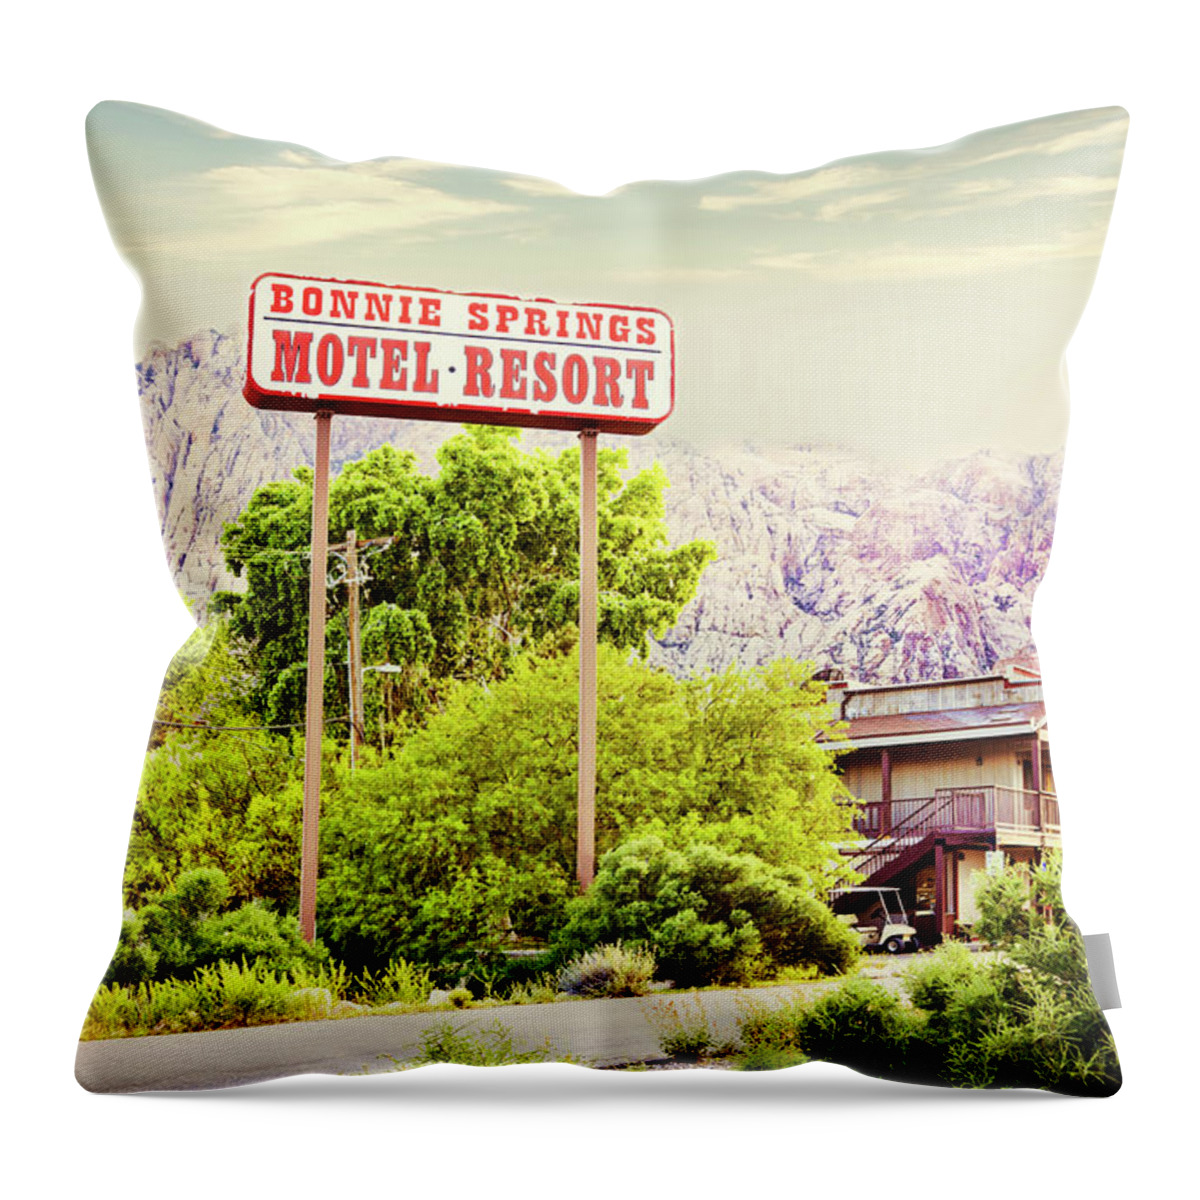 Bonnie Springs Motel Resort Throw Pillow featuring the photograph Bonnie Springs Motel Resort by Tatiana Travelways